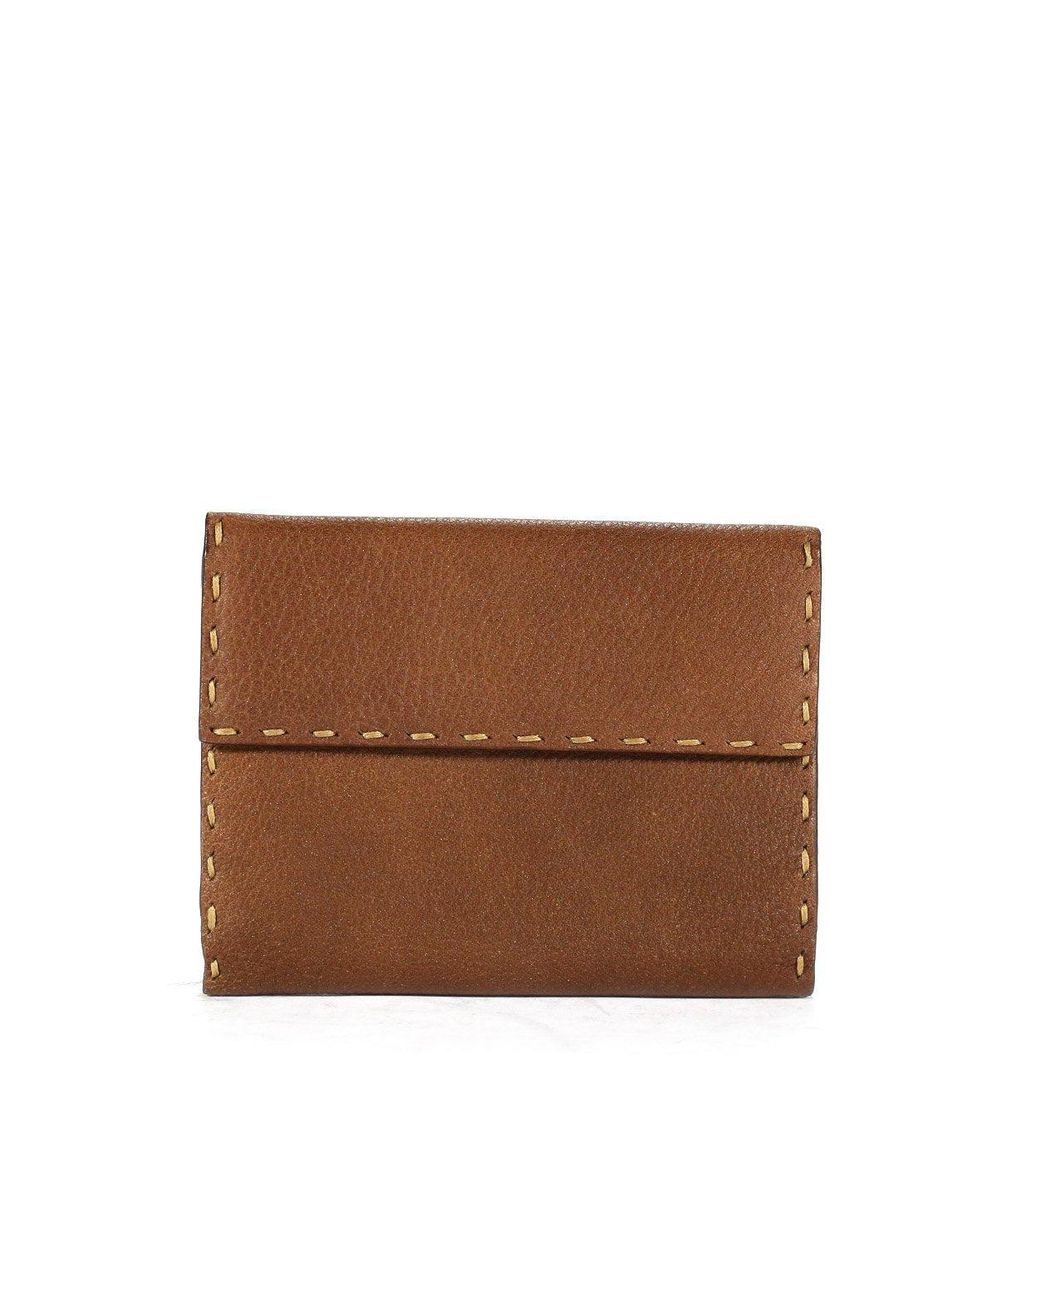 Fendi Women's Wallet Camel color Selleria Short leather designer 8M0145